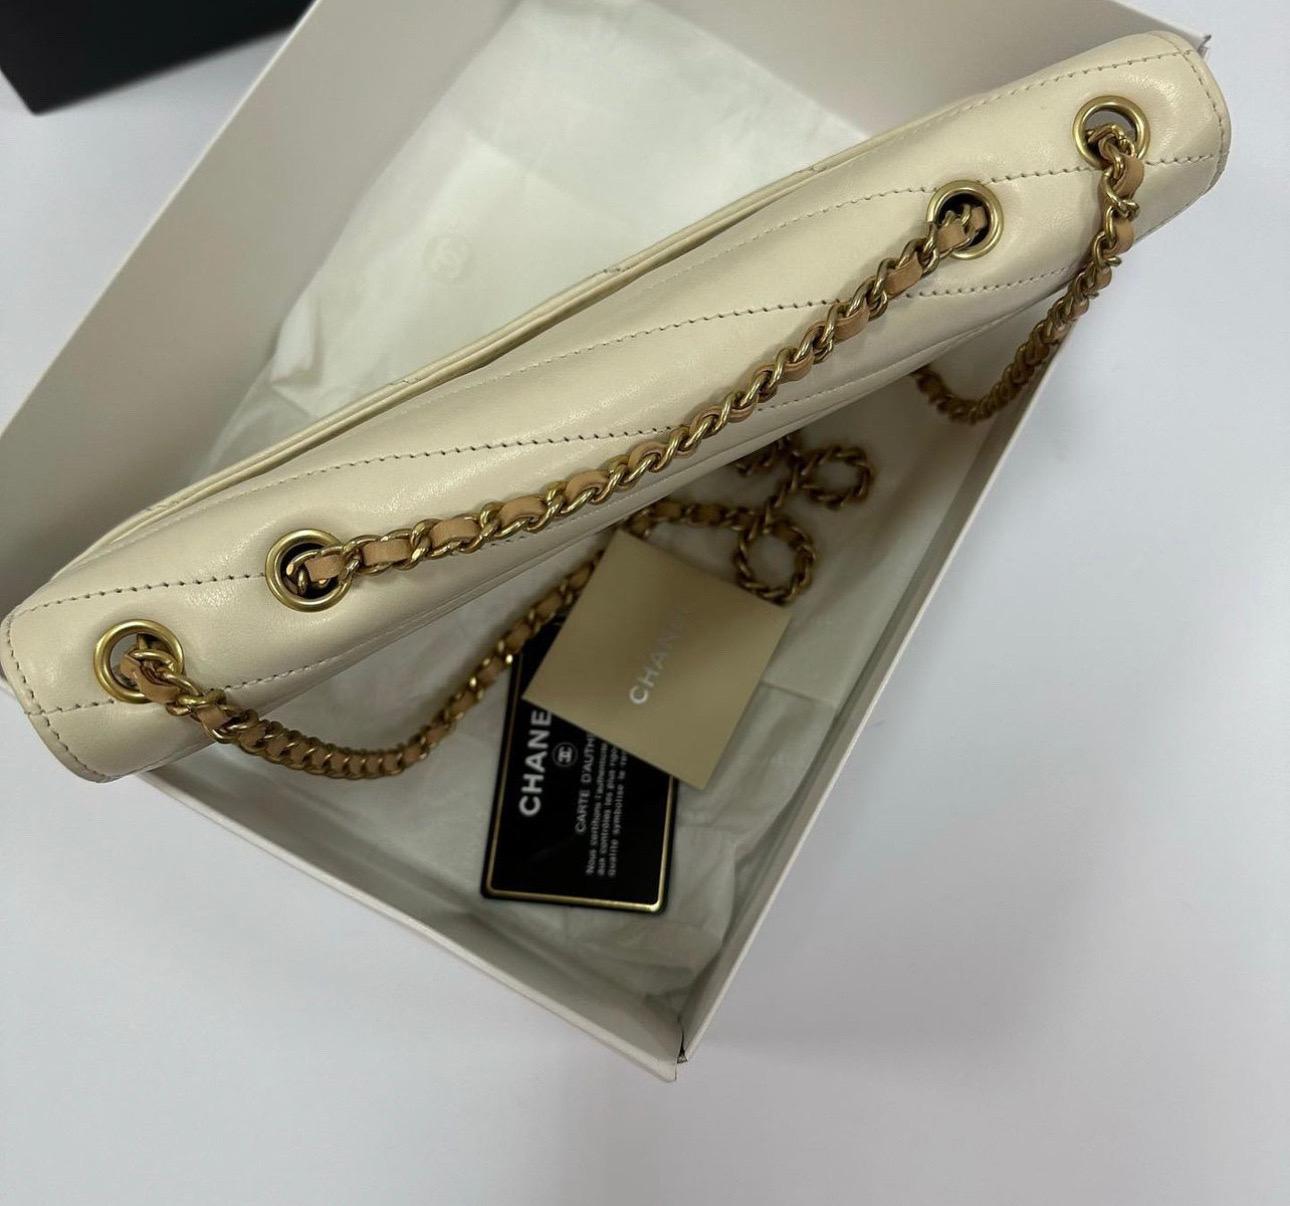 Chanel Beige Chevron Shoulder Bag In Excellent Condition For Sale In Krakow, PL